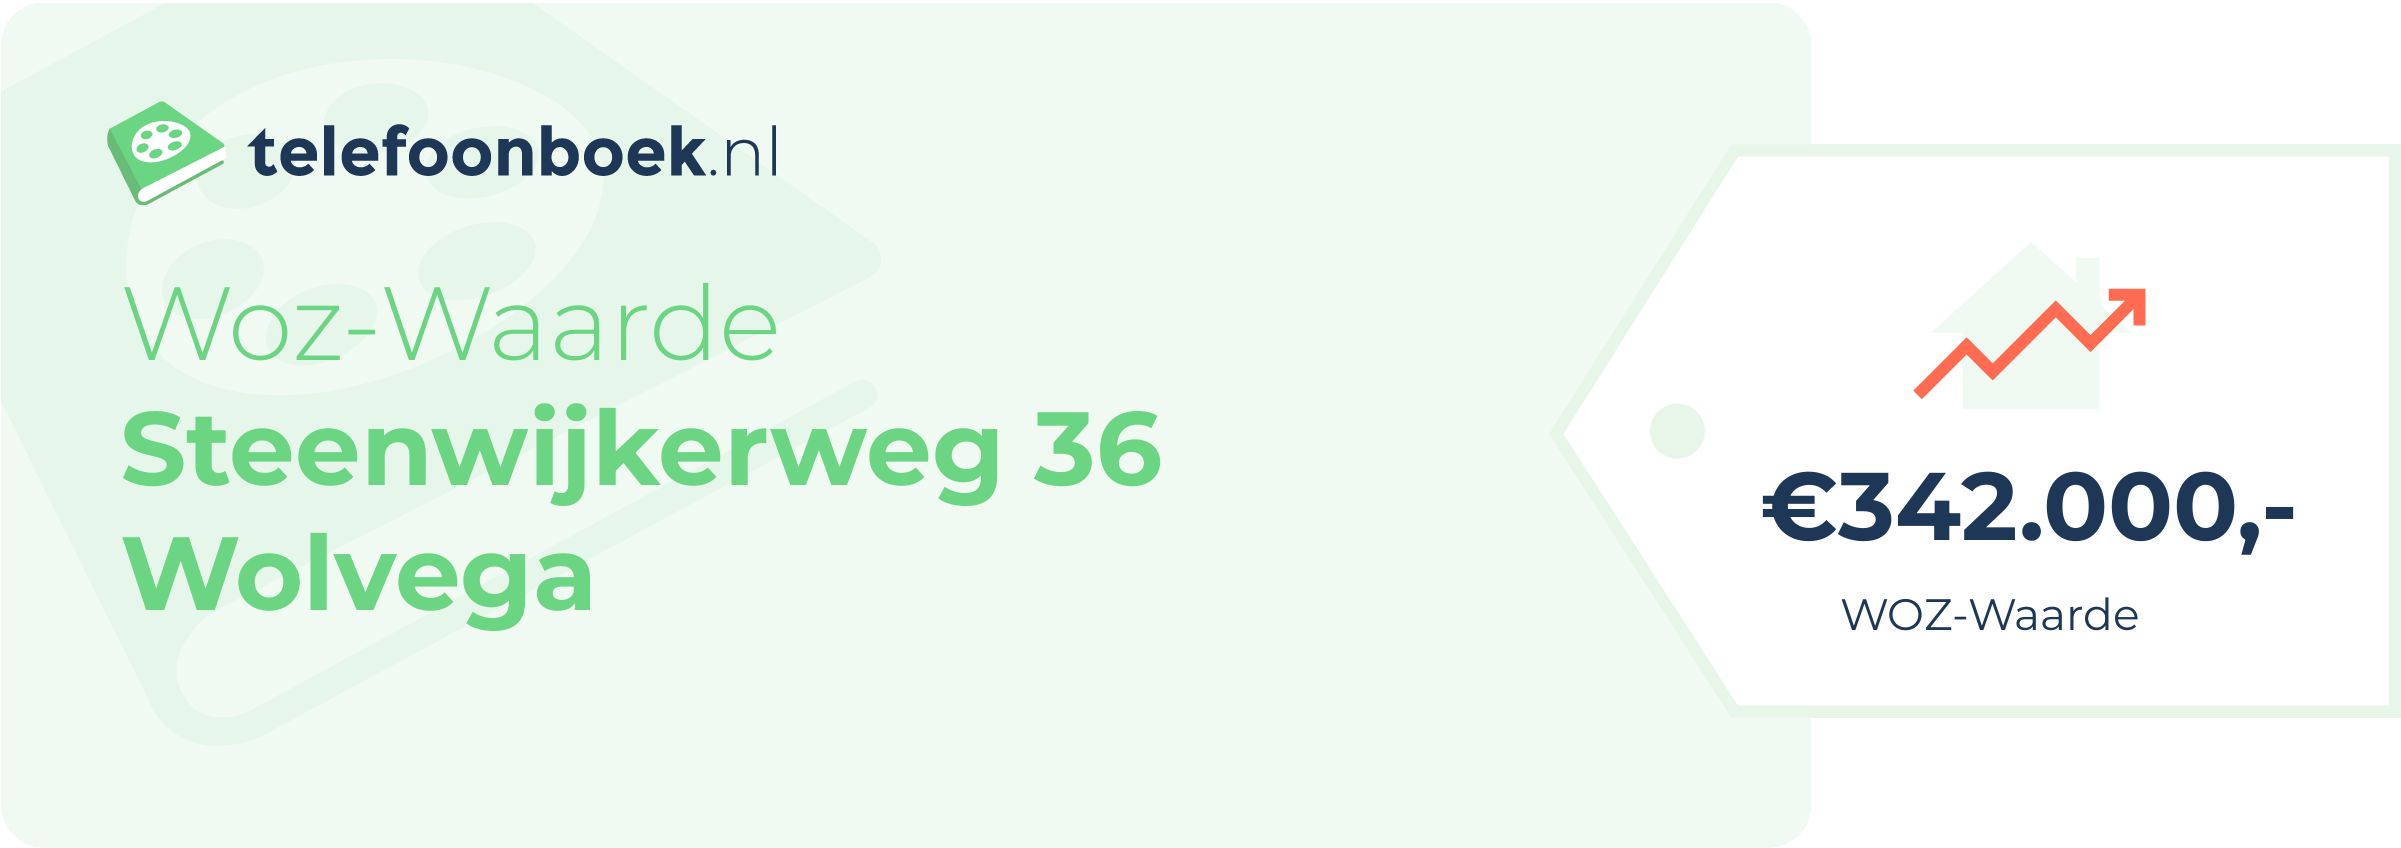 WOZ-waarde Steenwijkerweg 36 Wolvega